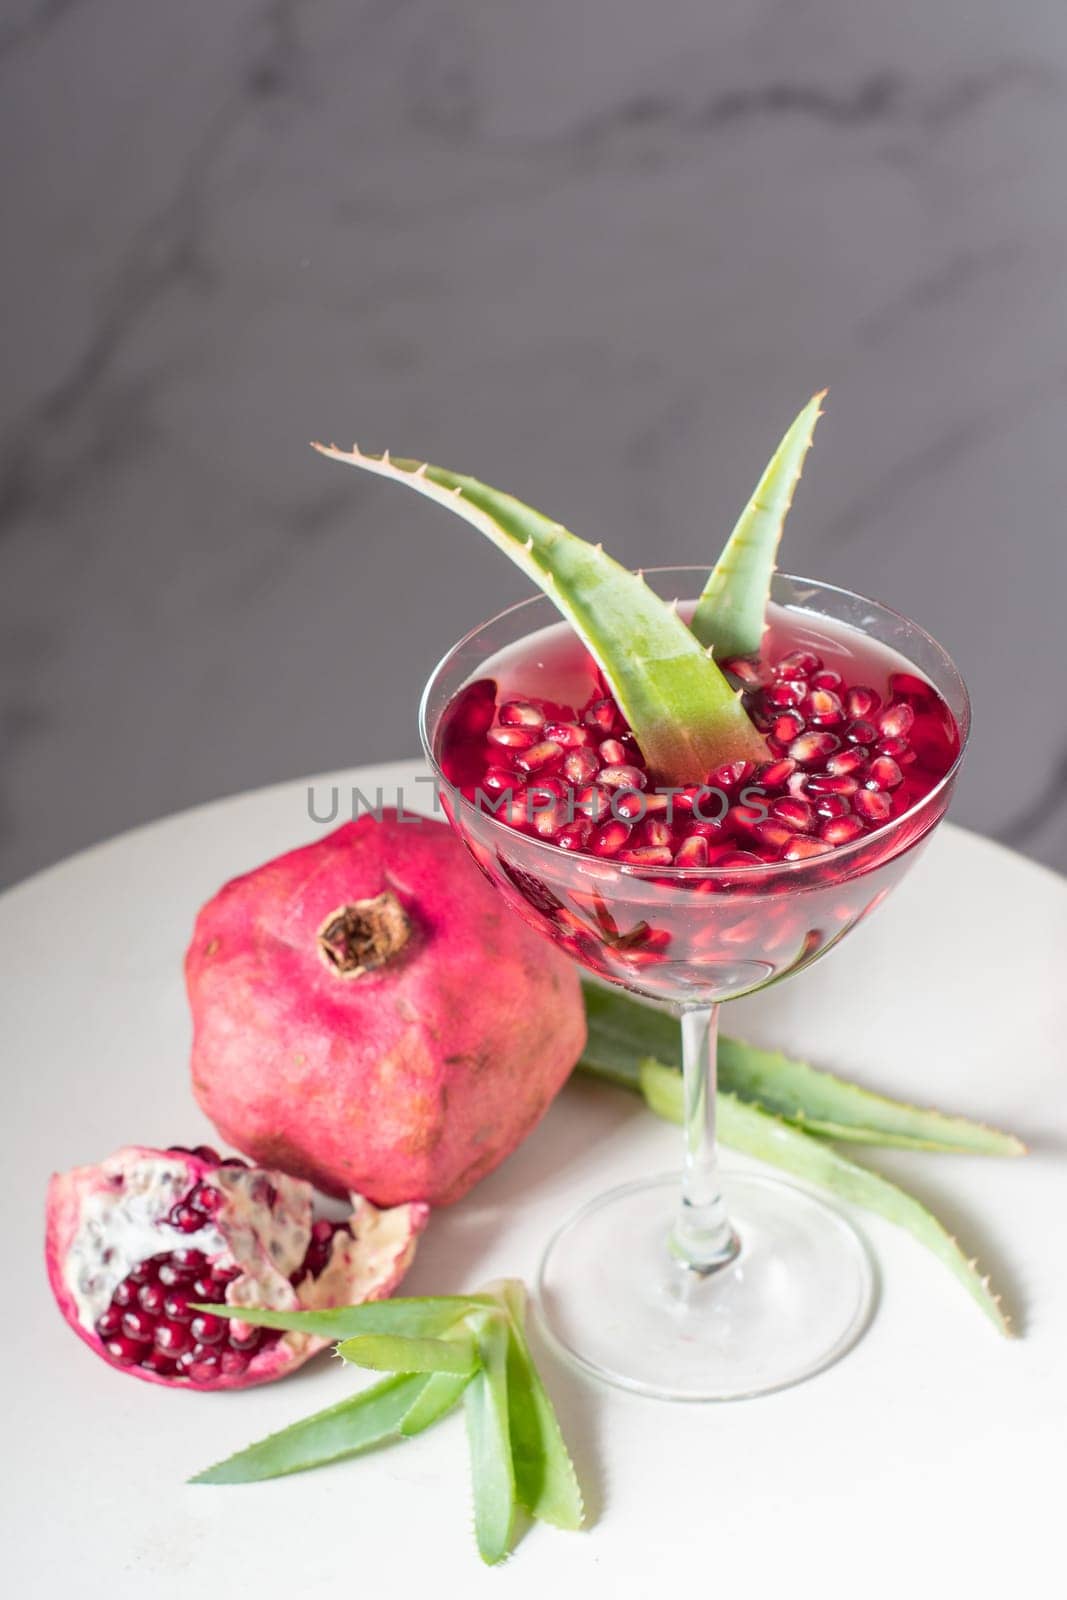 bright pomegranate juice with aloe vera, delicious alternative medicine, still life on white table. High quality photo